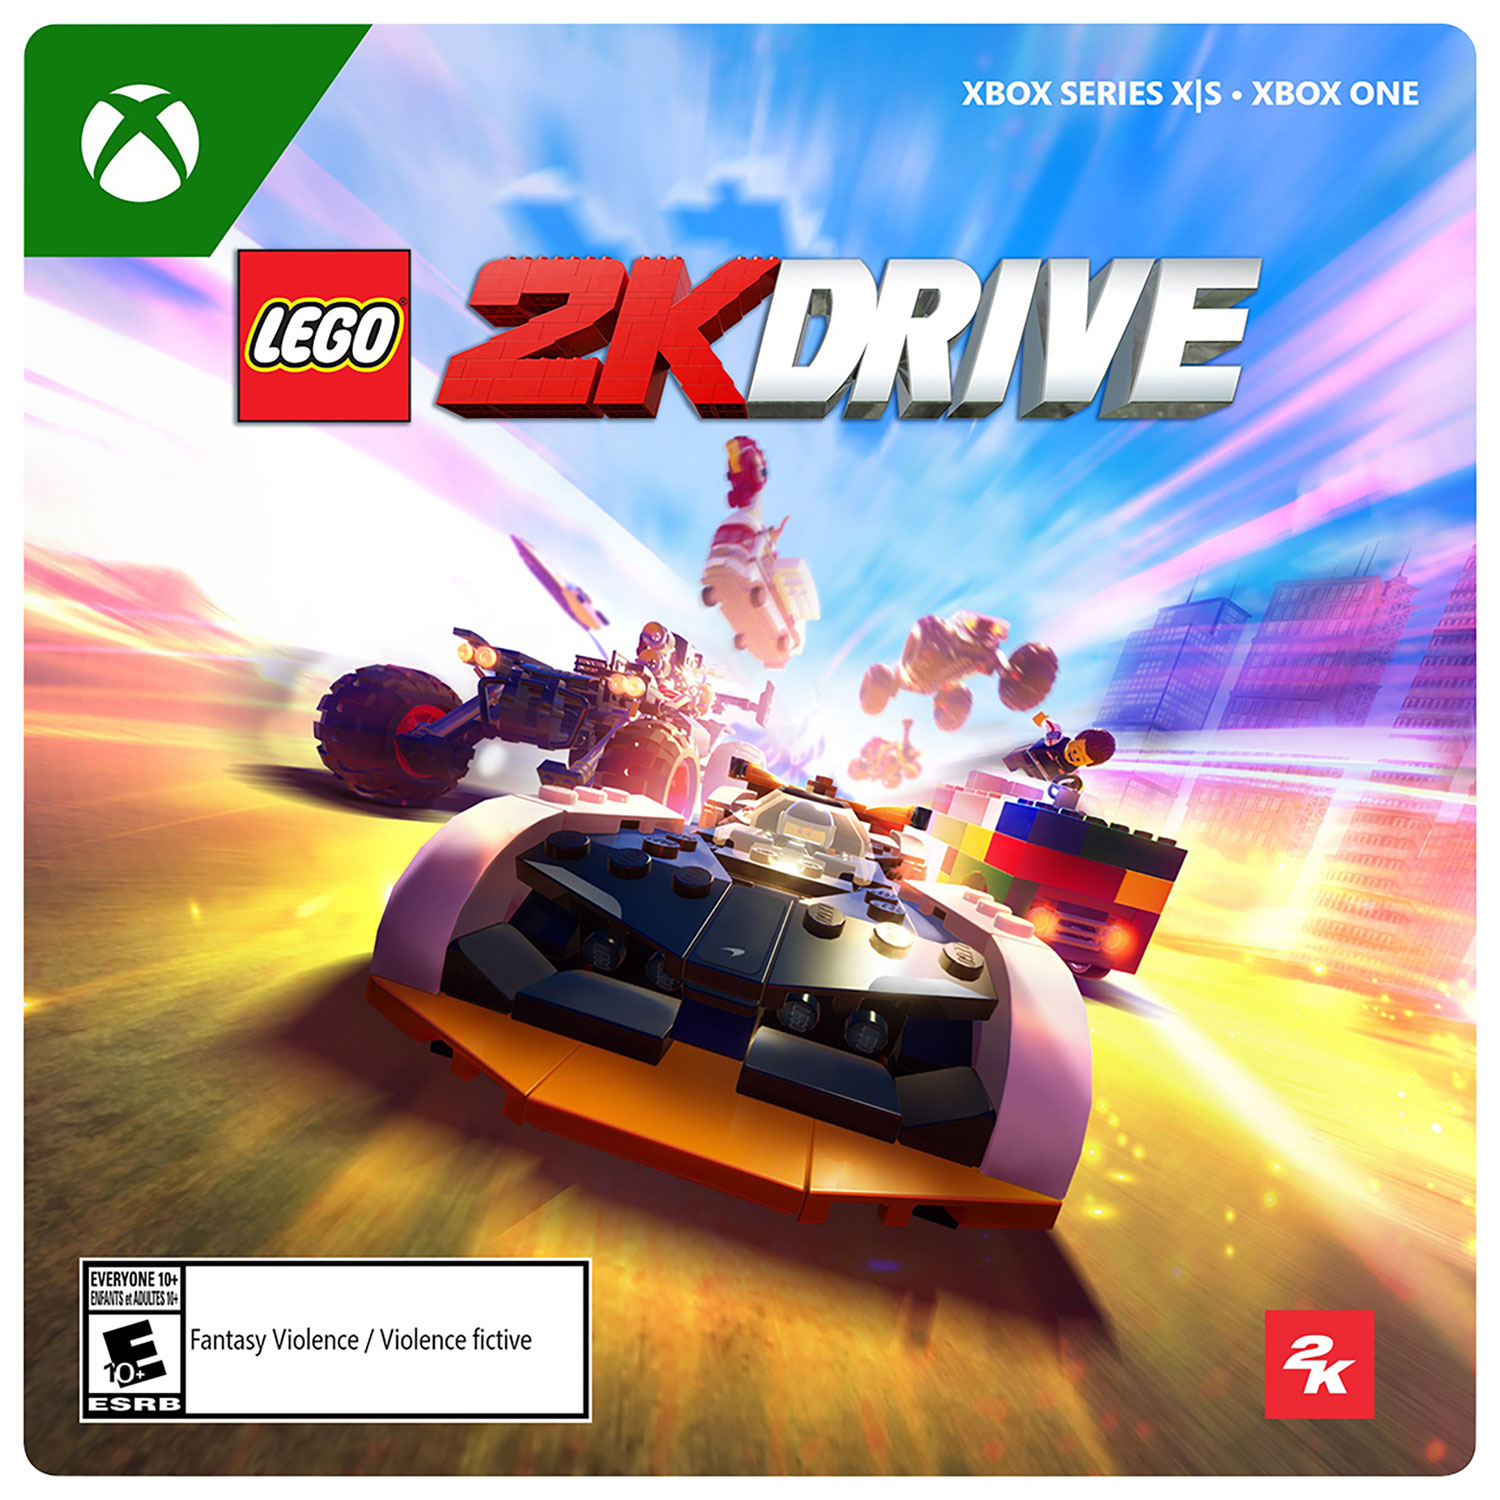 LEGO 2K Drive (Xbox Series X|S / Xbox One) - Digital Download